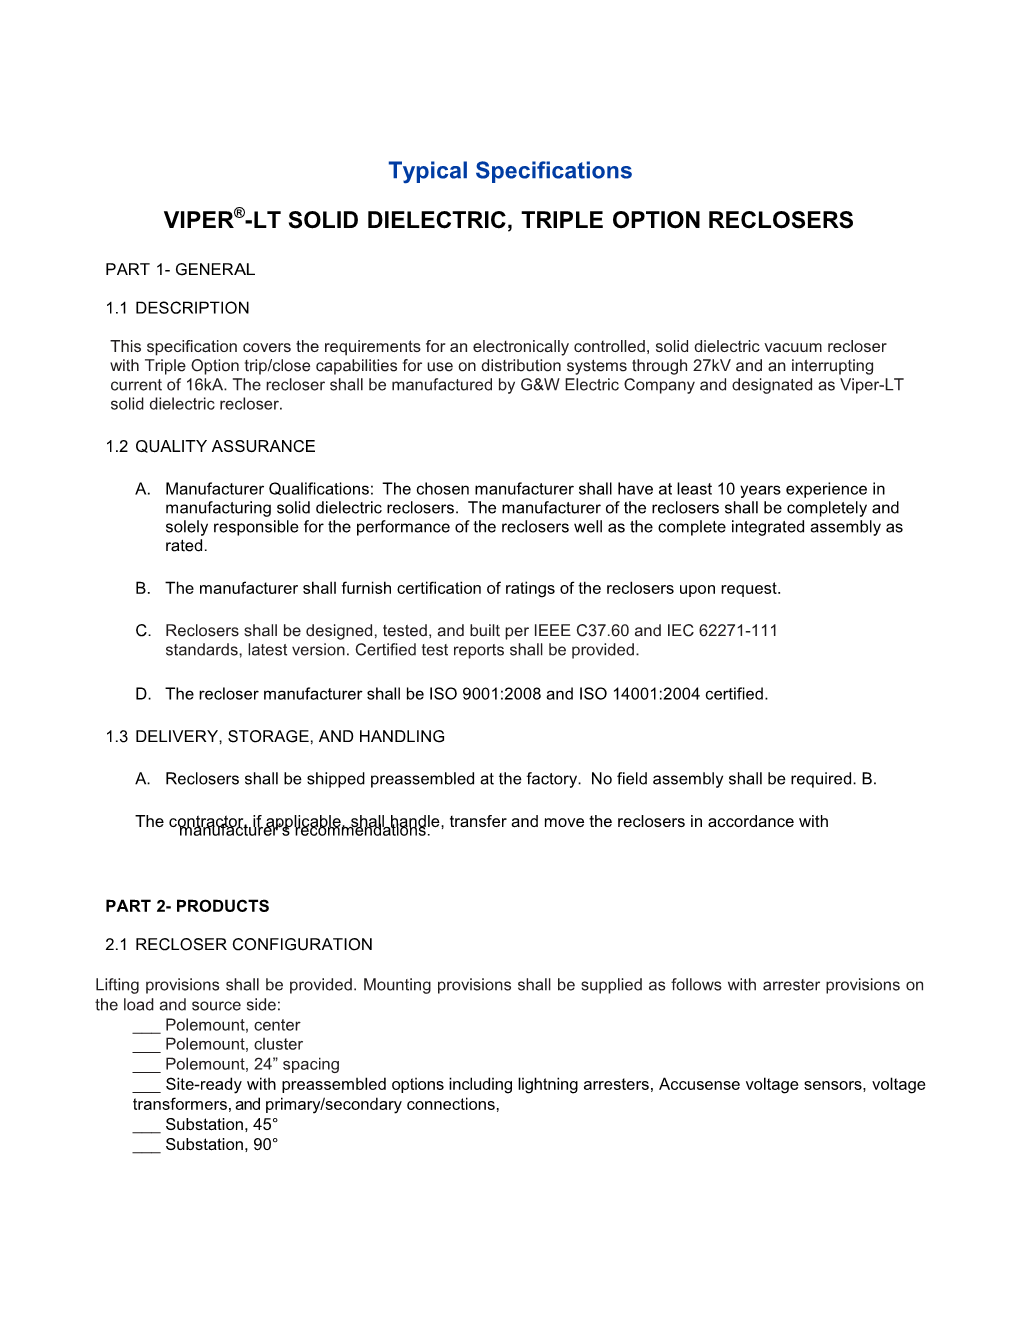 Viper -Lt Soliddielectric,Tripleoption Reclosers